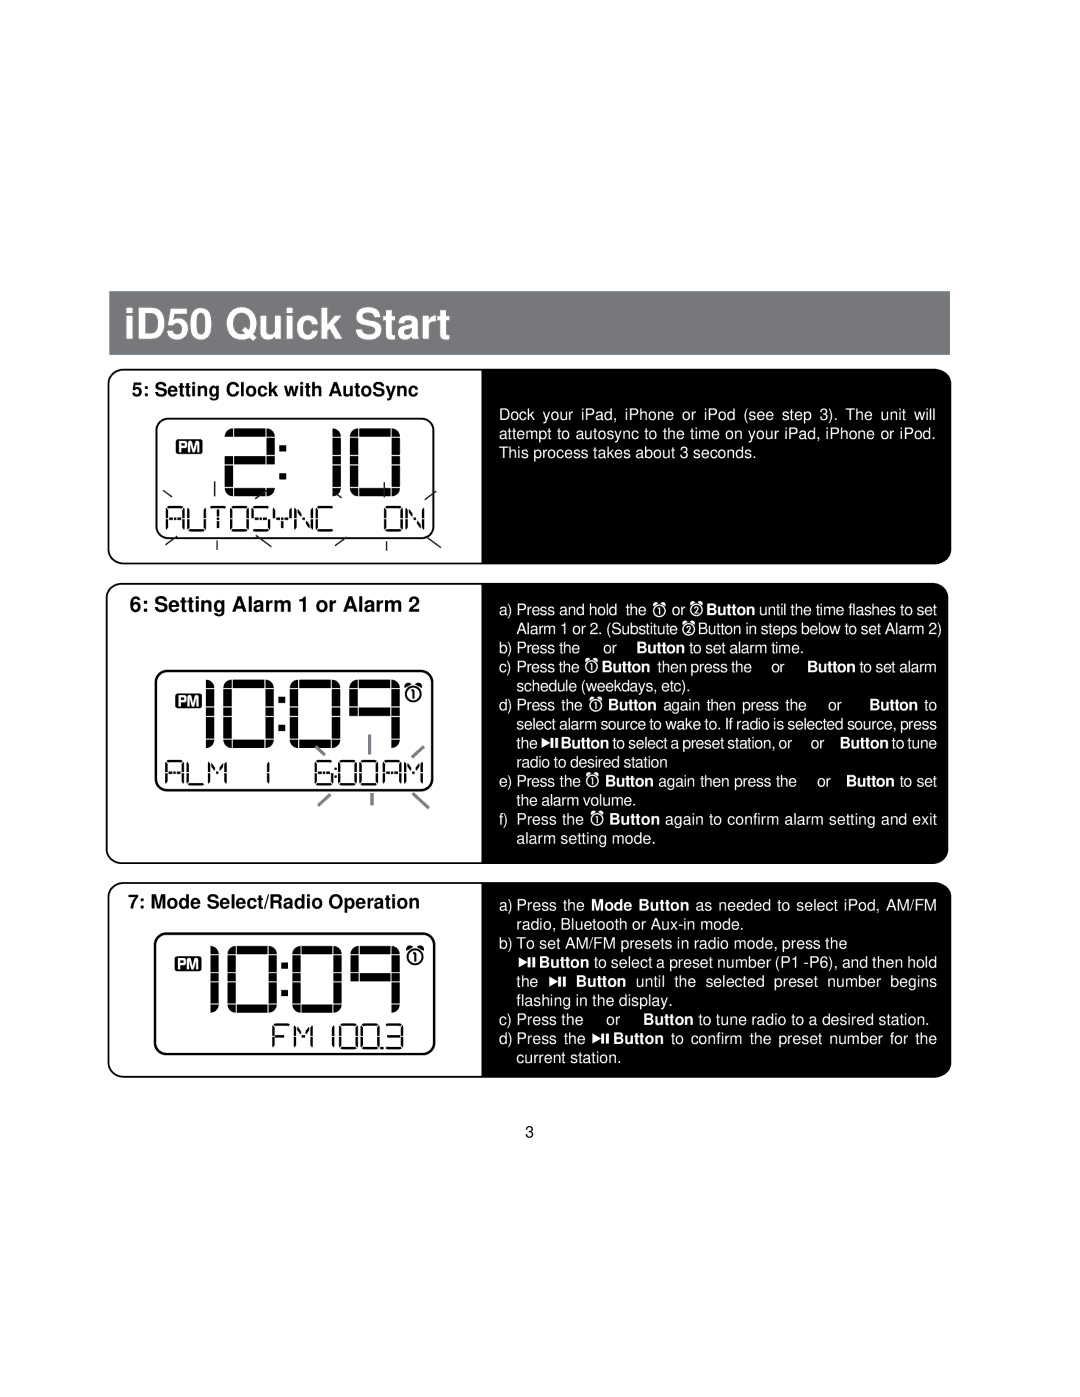 iHome id50 manual Setting Clock with AutoSync, Mode Select/Radio Operation 